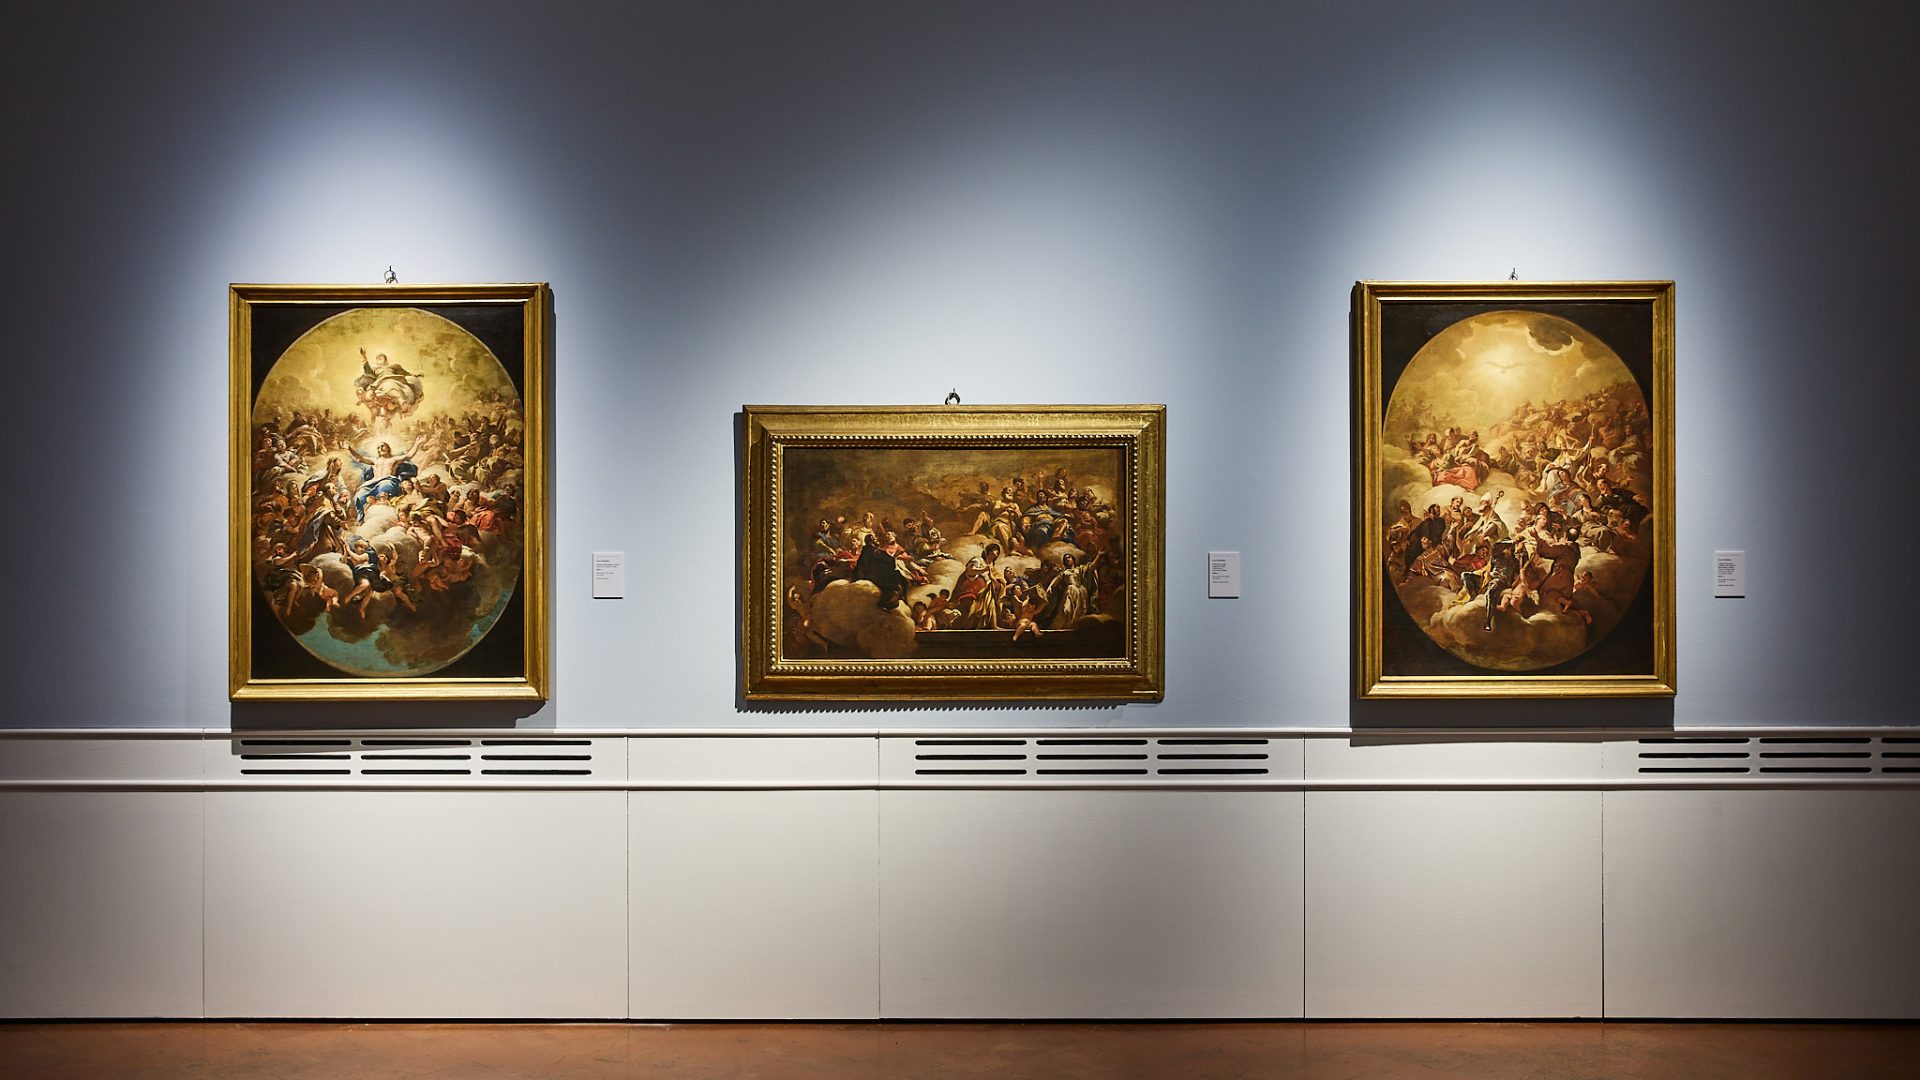 Luca Giordano, second hall, Baroque Glories for Corsini Family